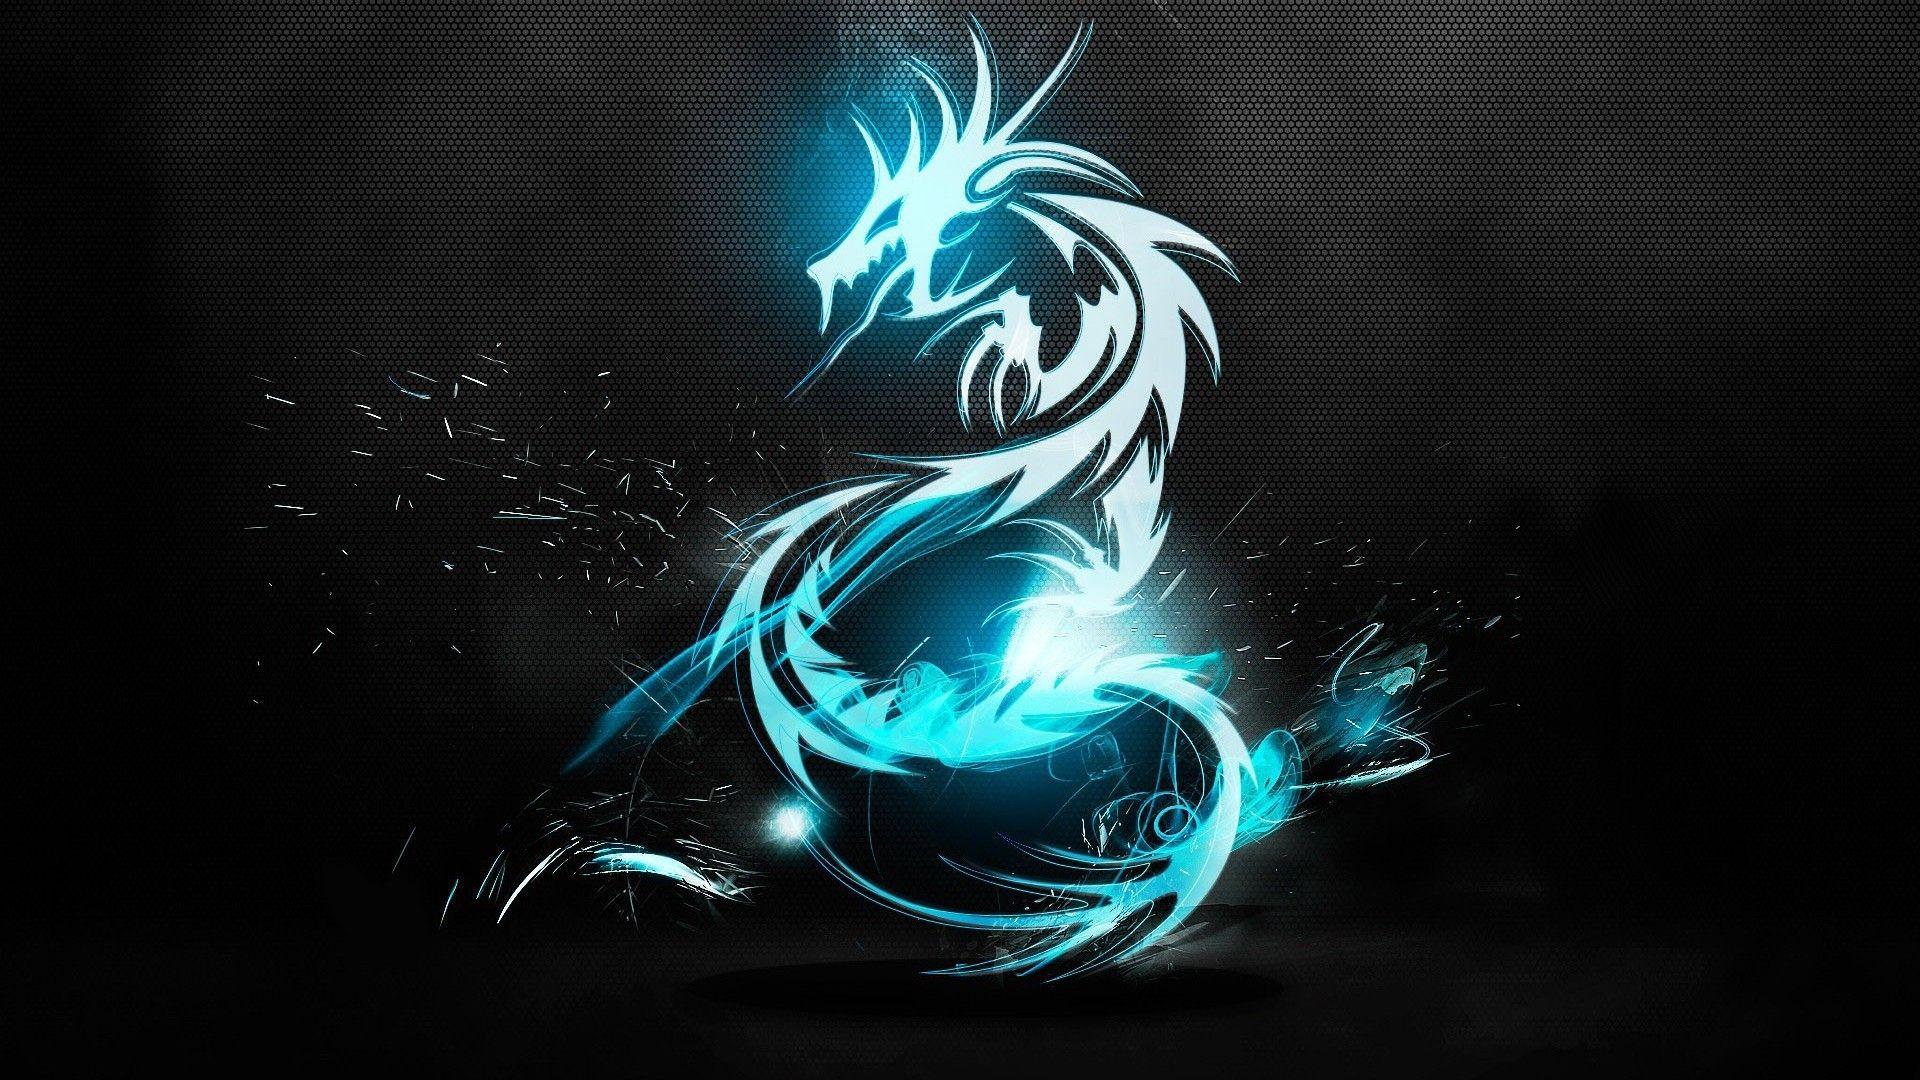 Ice Dragon Logo - wallpaper.wiki-Ice-Dragon-Images-PIC-WPE003618 | wallpaper.wiki